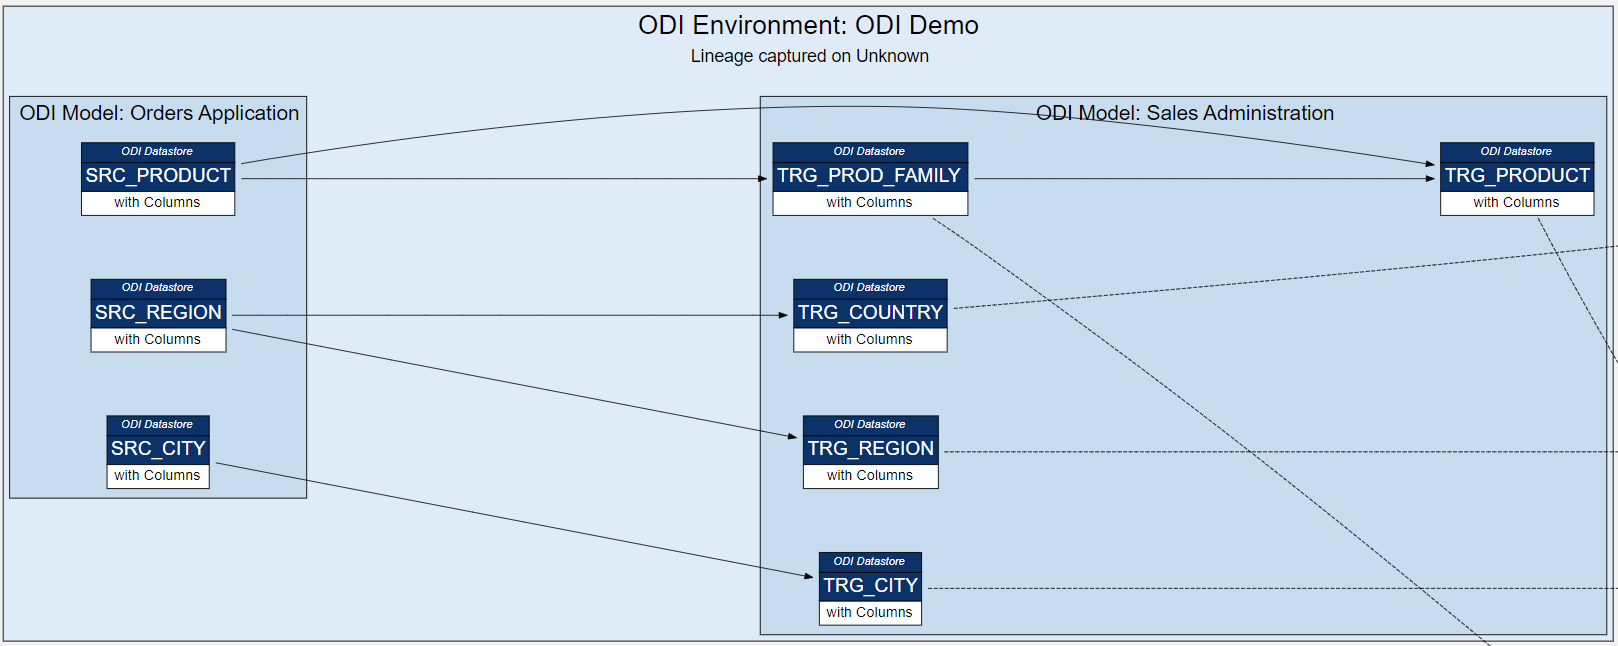 Demo ODI Environment 